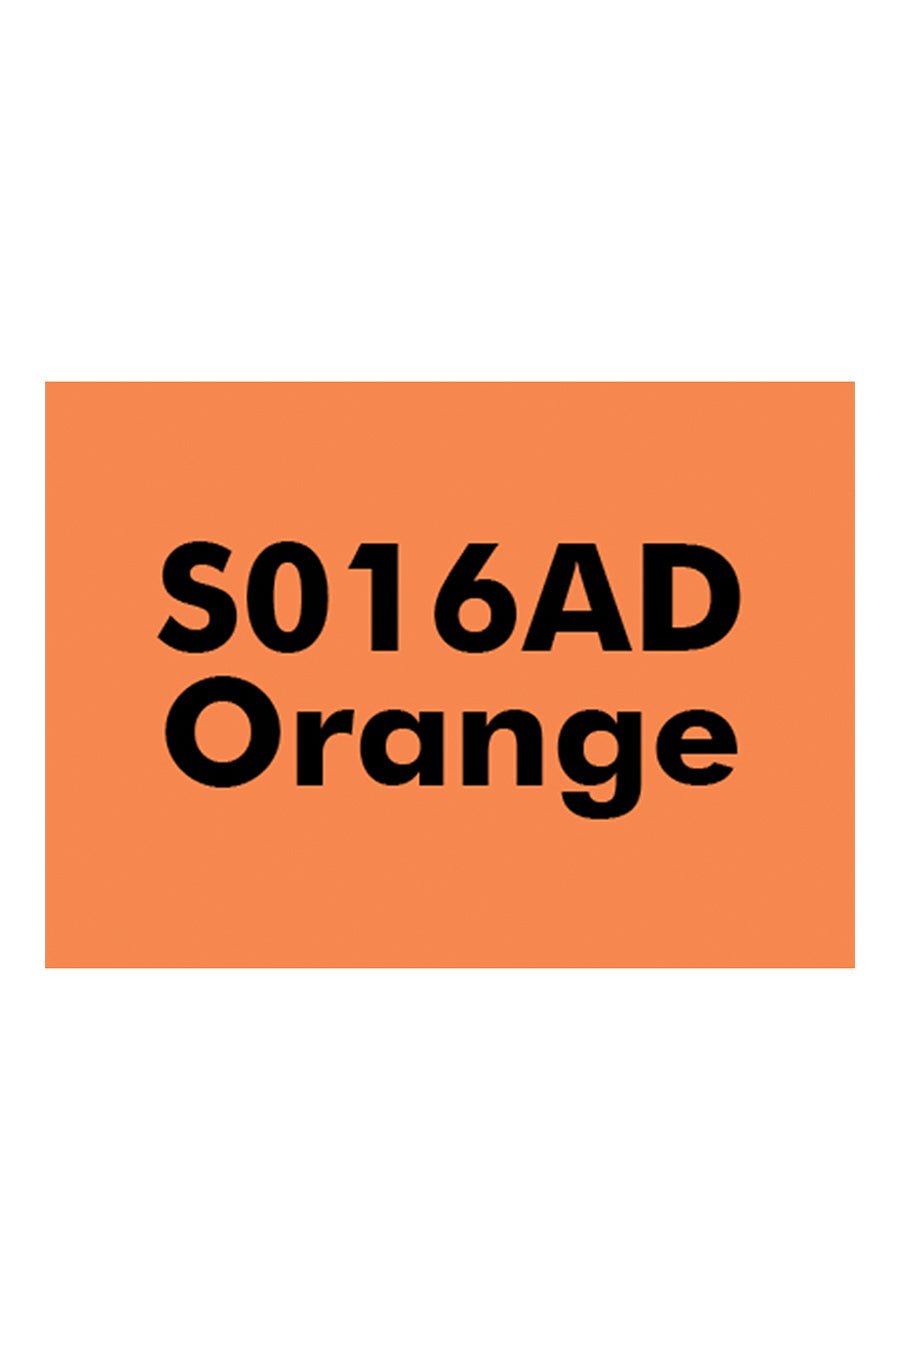 Spectra AD® Marker Orange Color Family